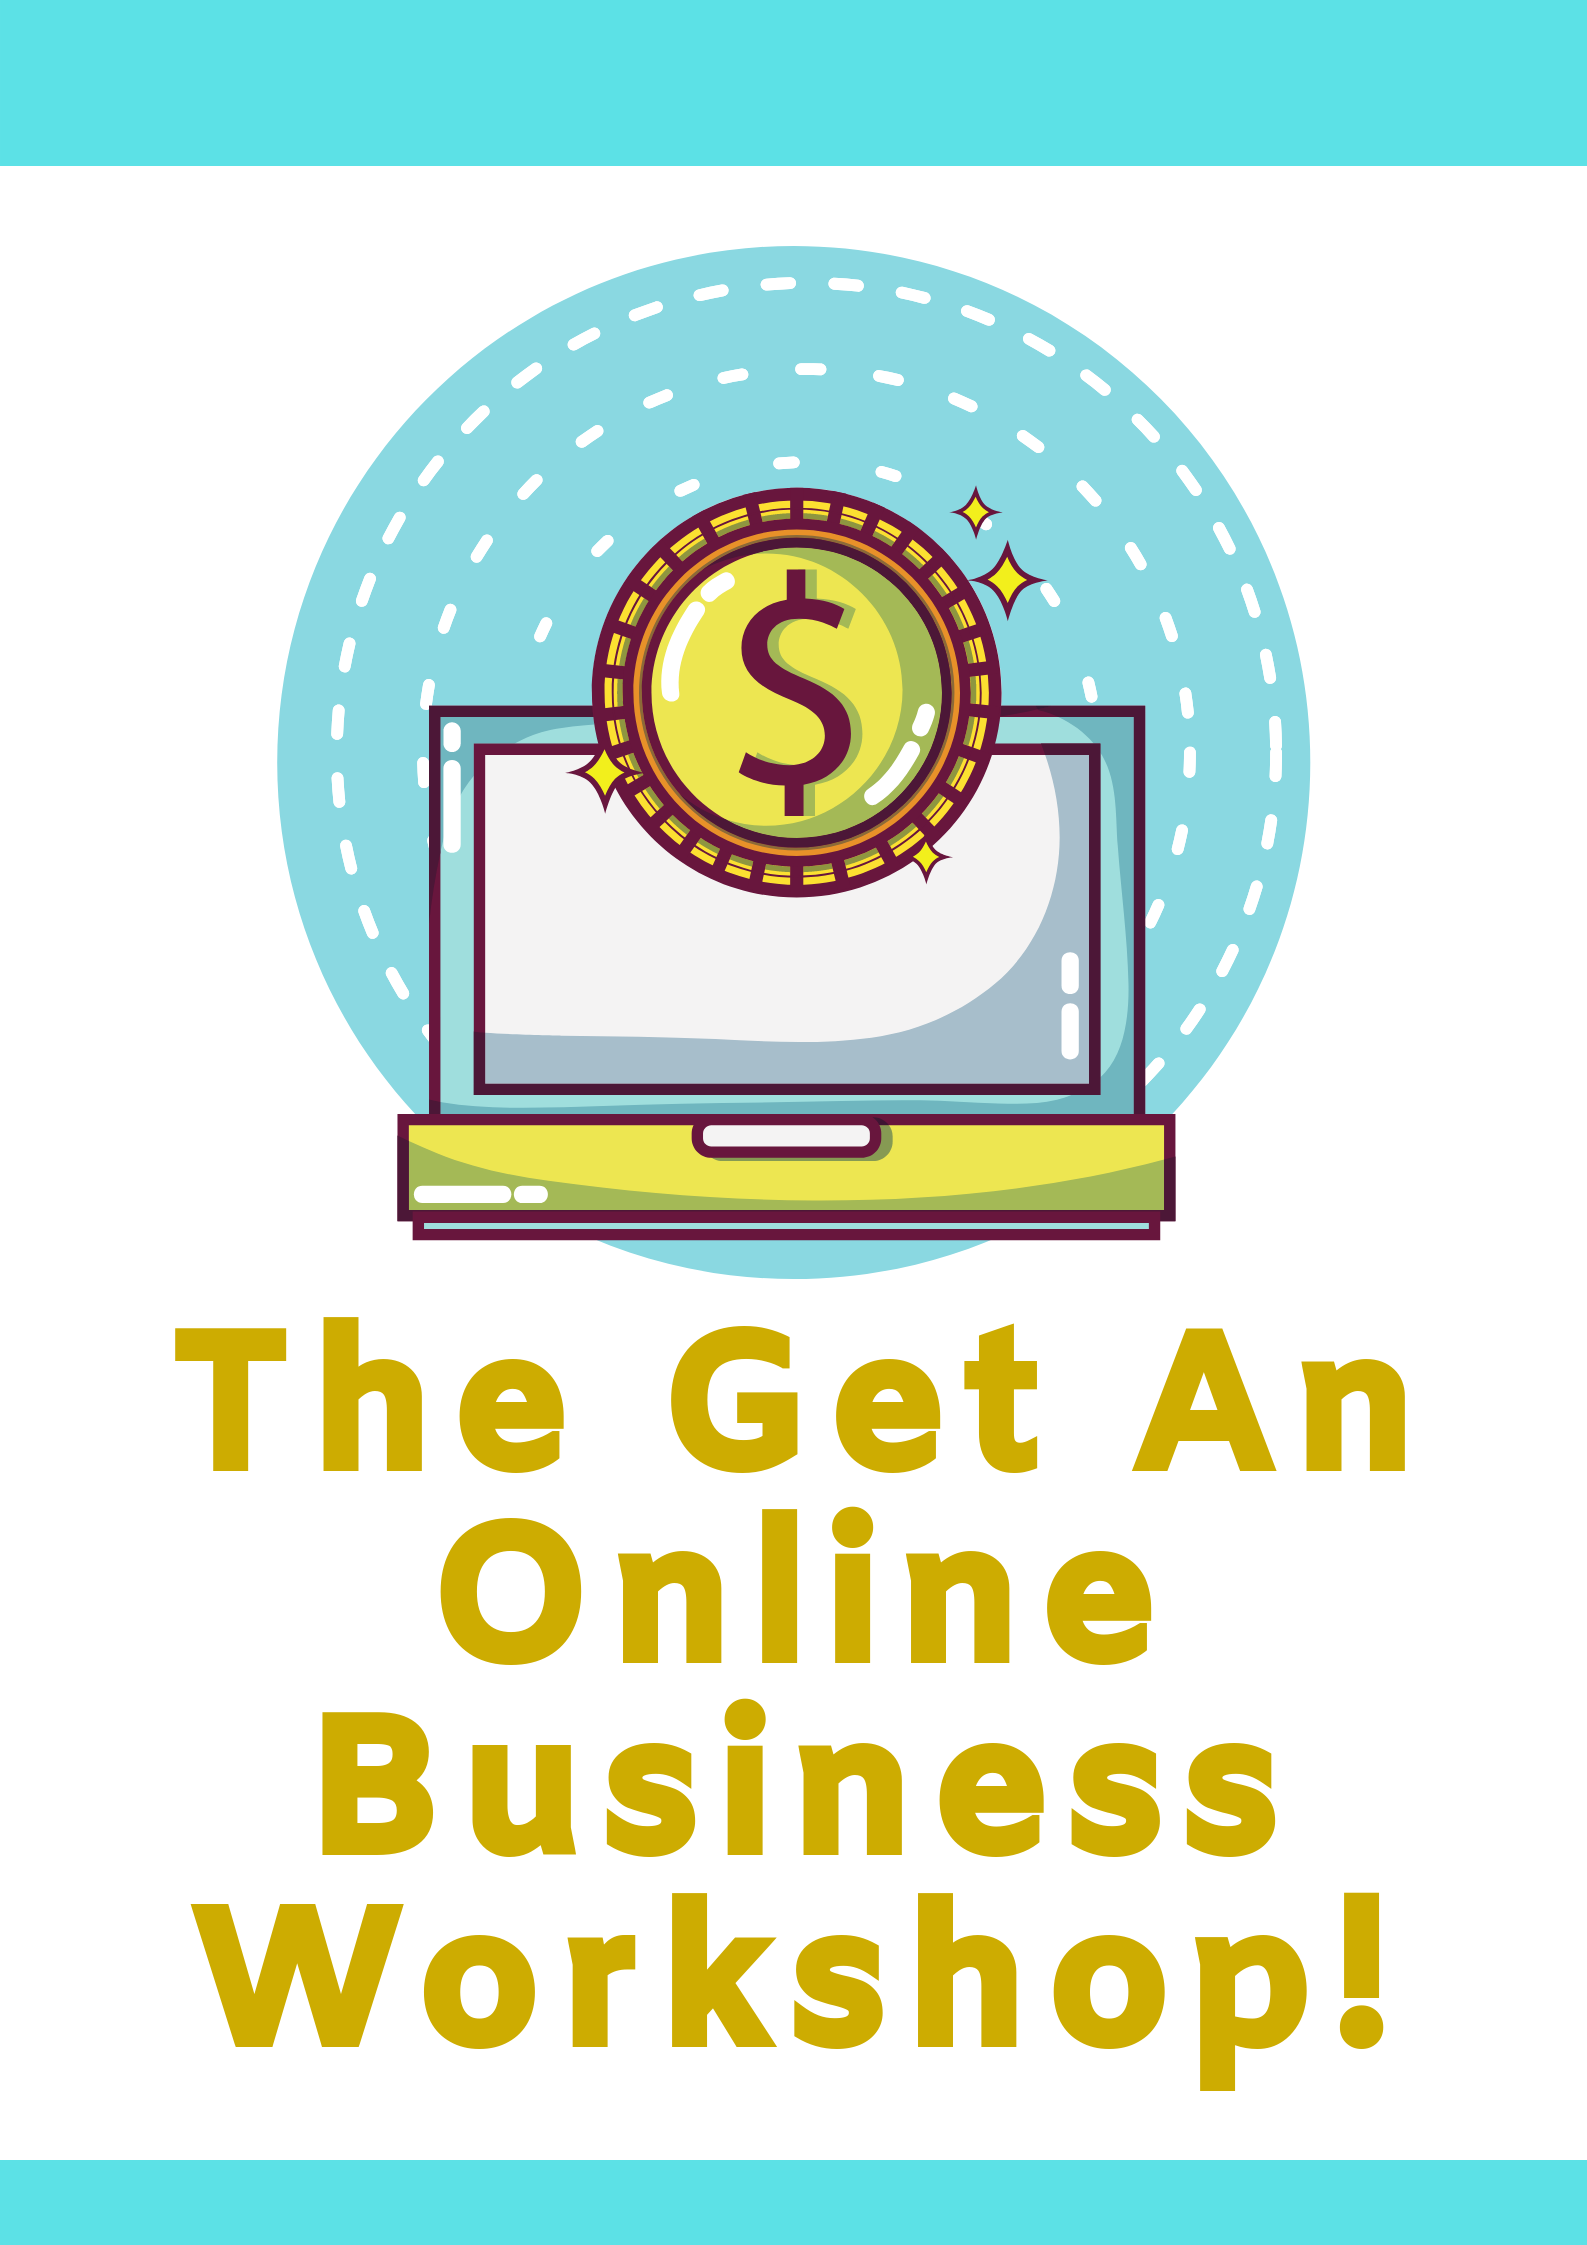 The Get An Online Business Workshop